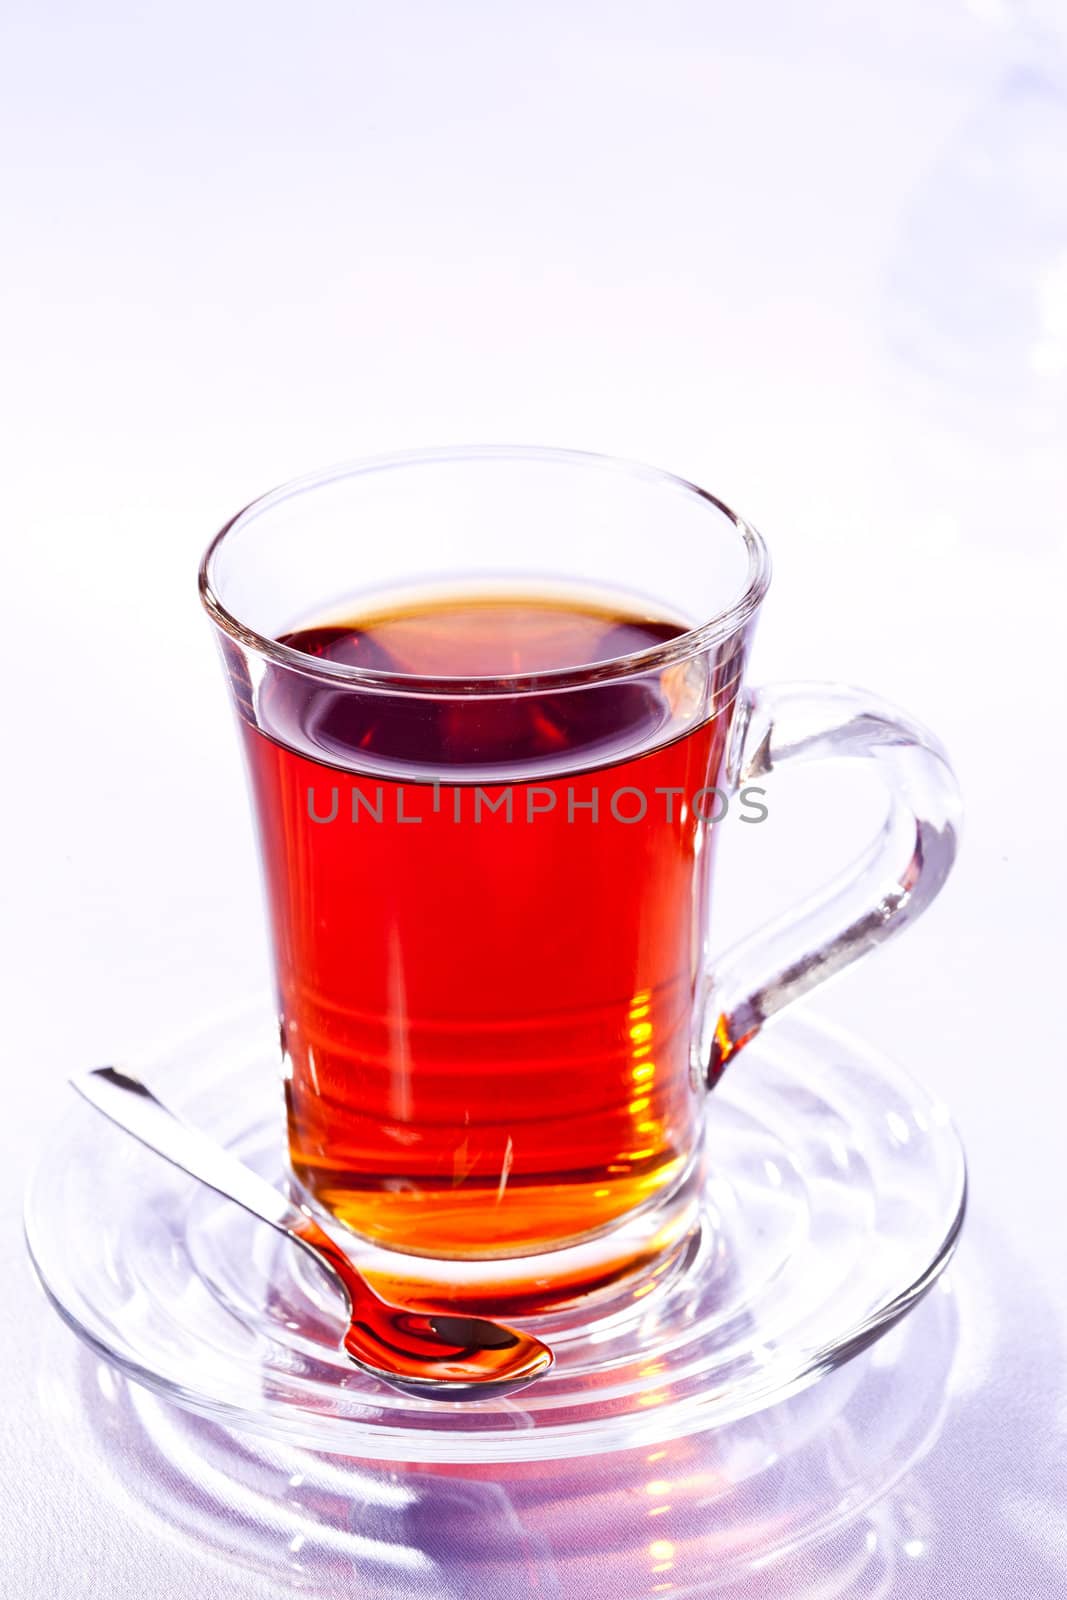 drink series: cup of tea, top view